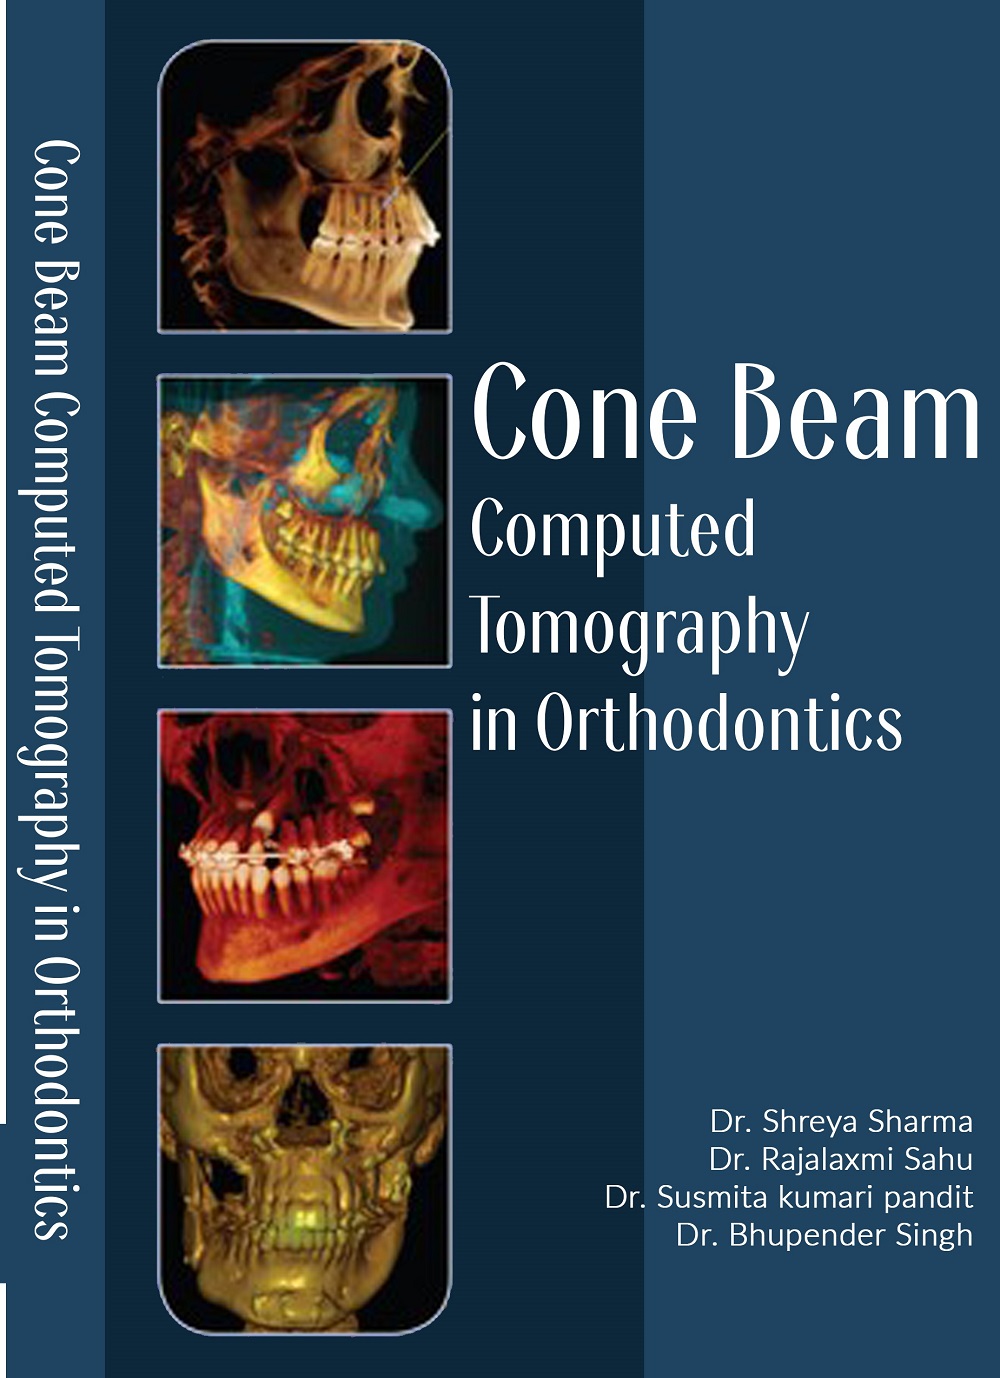 CONE BEAM COMPUTED TOMOGRAPHY IN ORTHODONTICS